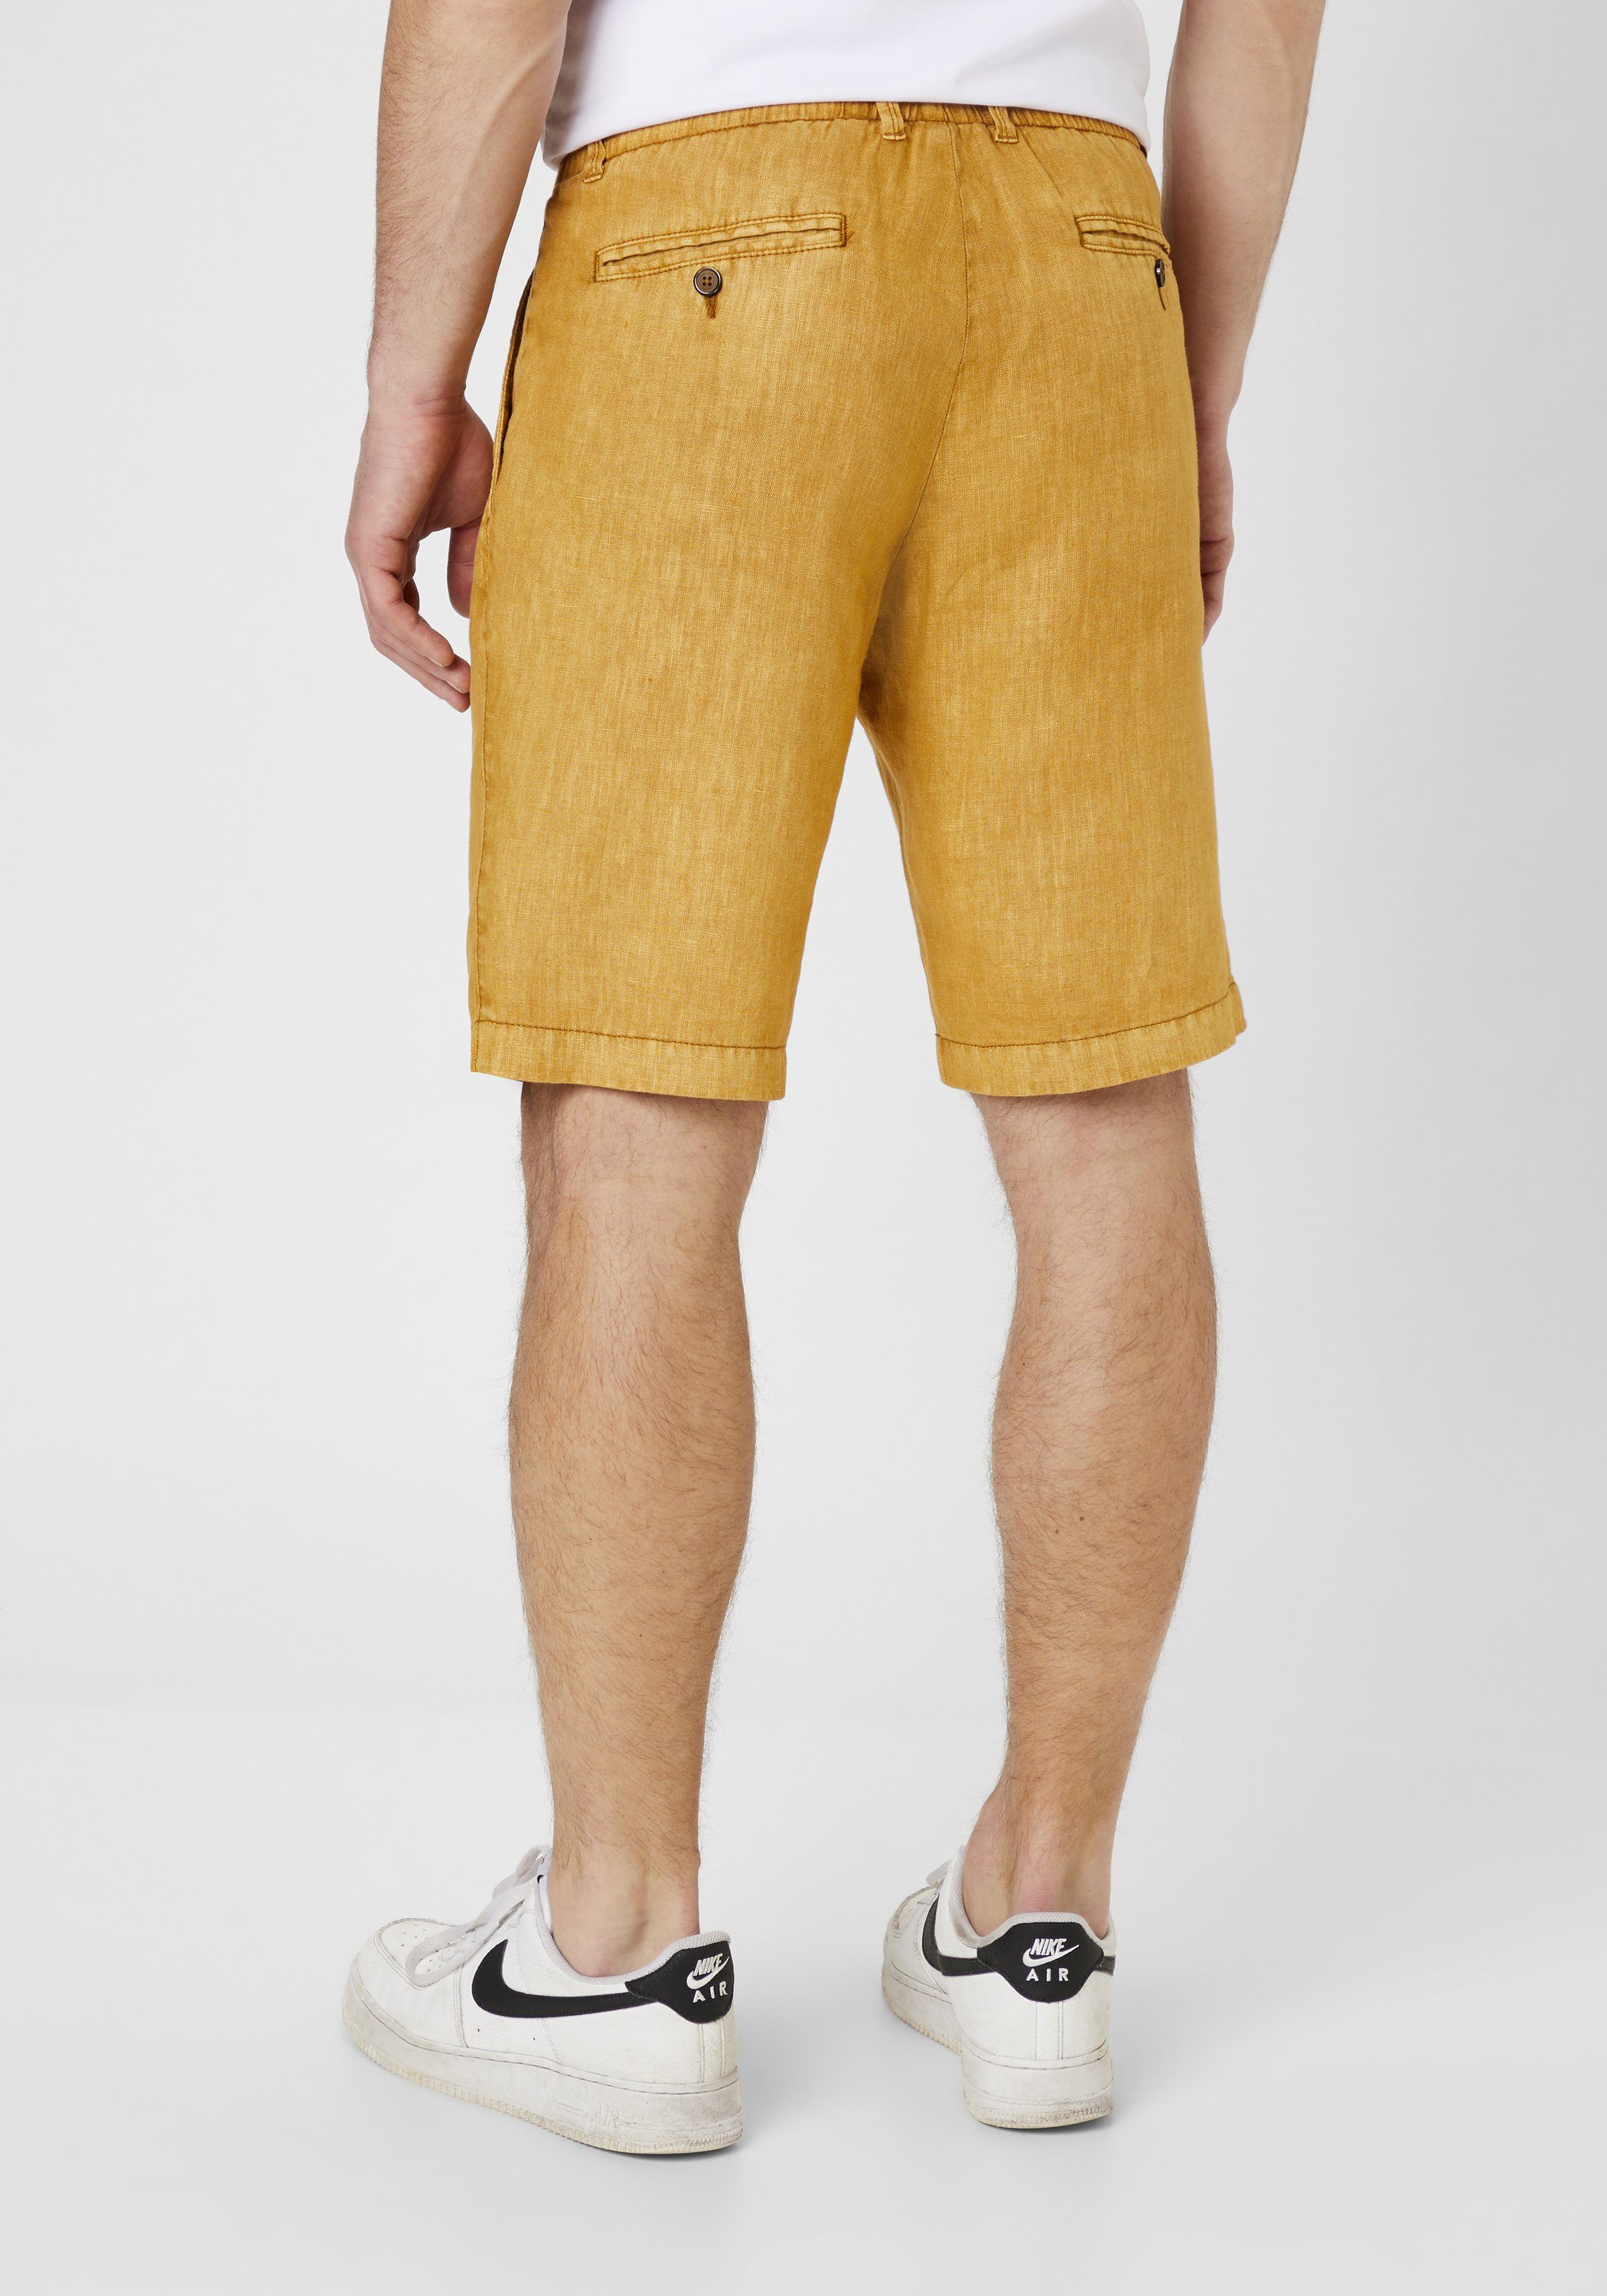 S4 Jackets Bermudas MAUI 2 aus Modern Leichte Fit corn Leinen Shorts